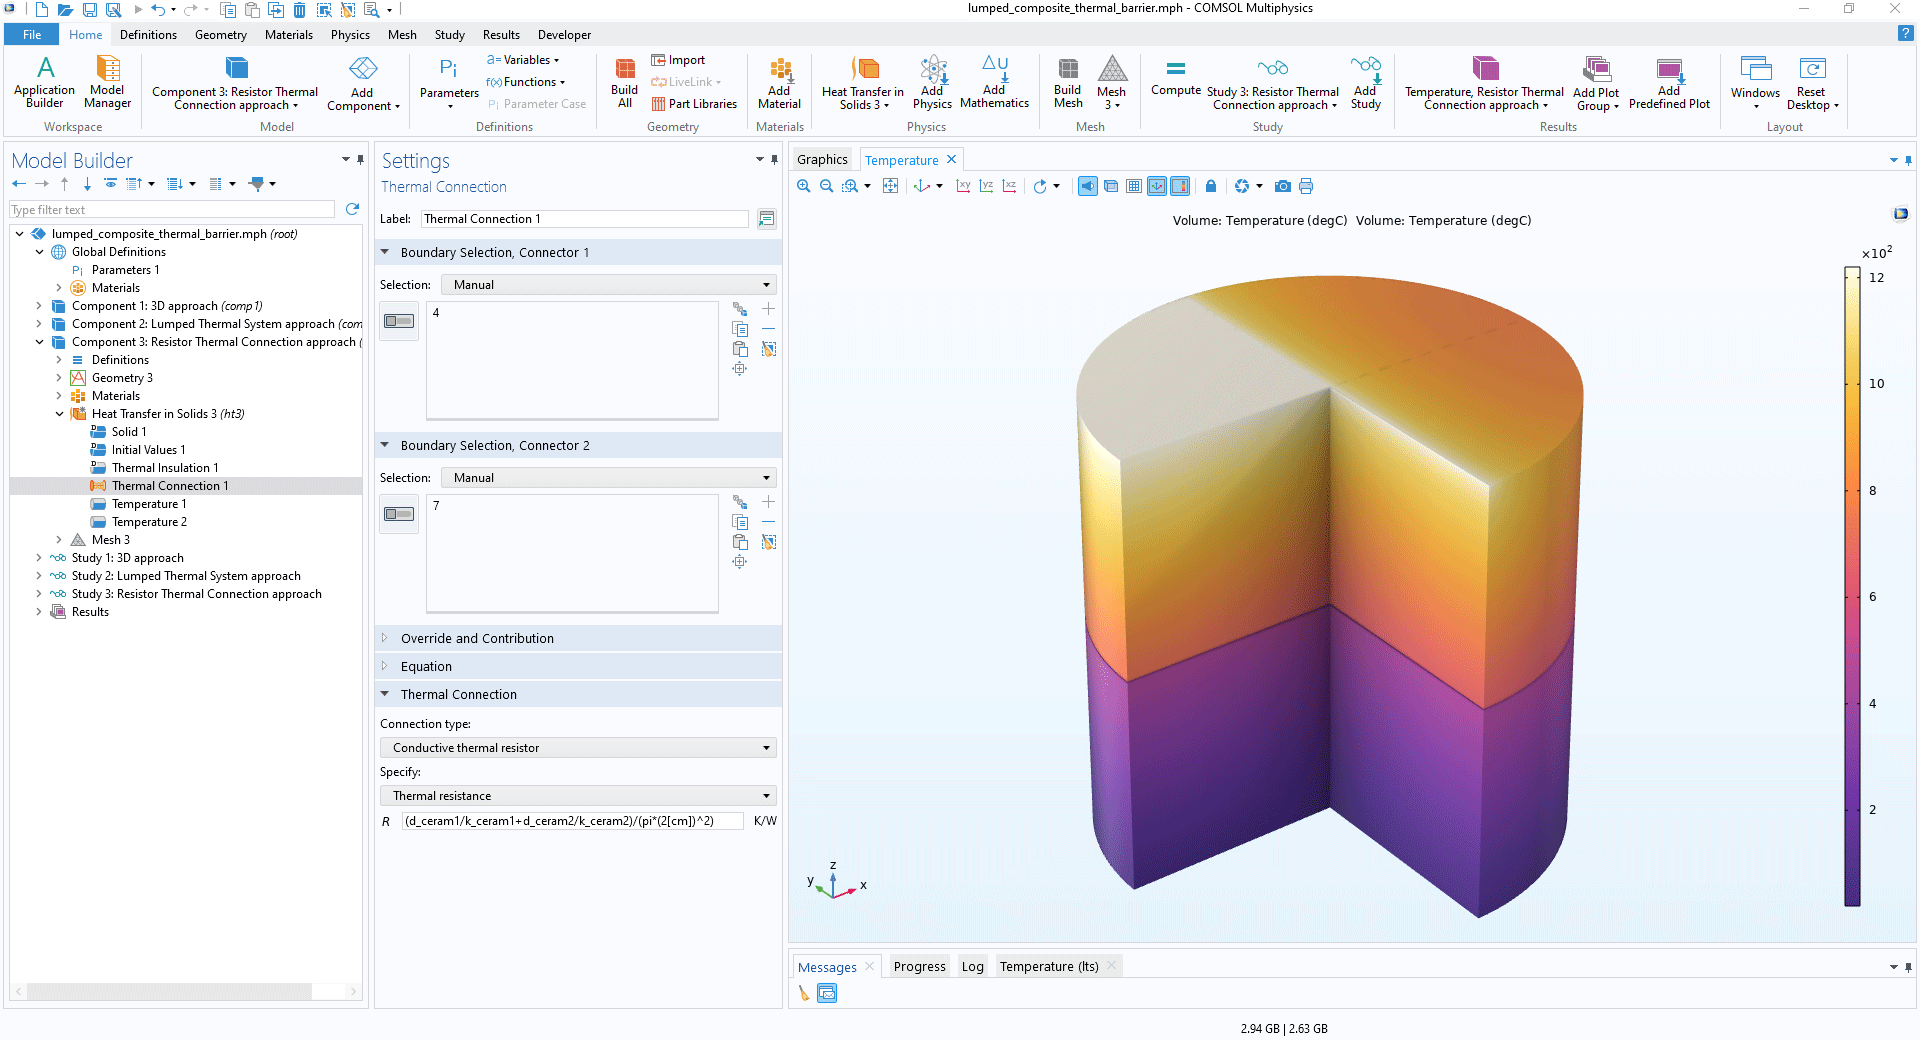 COMSOL Multiphysics 用户界面，显示了“模型开发器”，其中突出显示“热连接”节点，并显示其对应的“设置”窗口；“图形”窗口中显示复合集总模型。